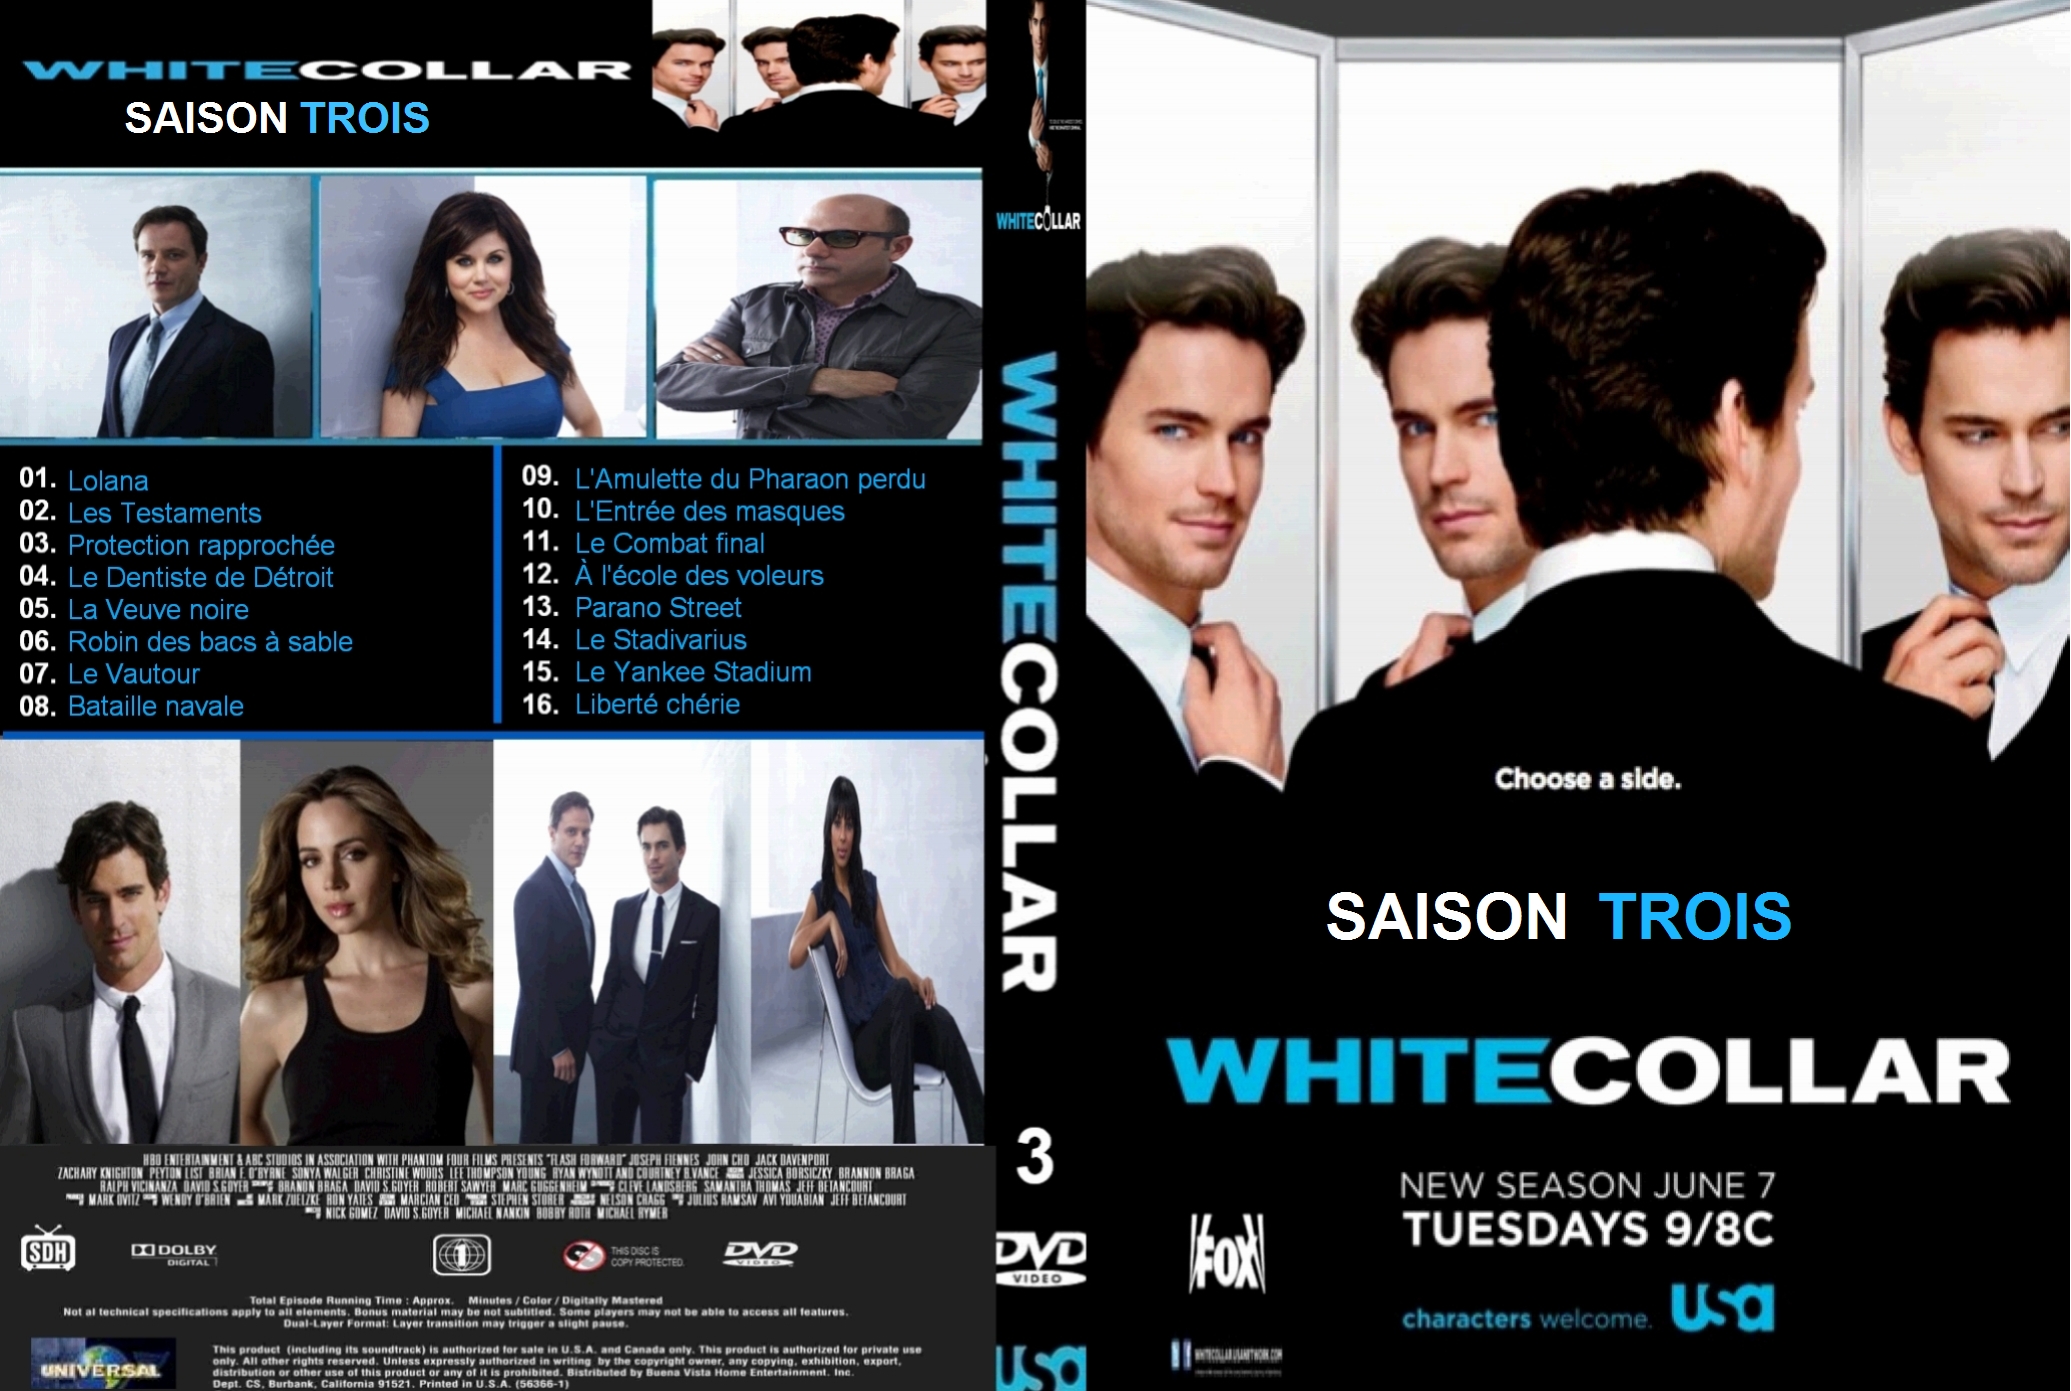 Jaquette DVD White Collar saison 3 custom